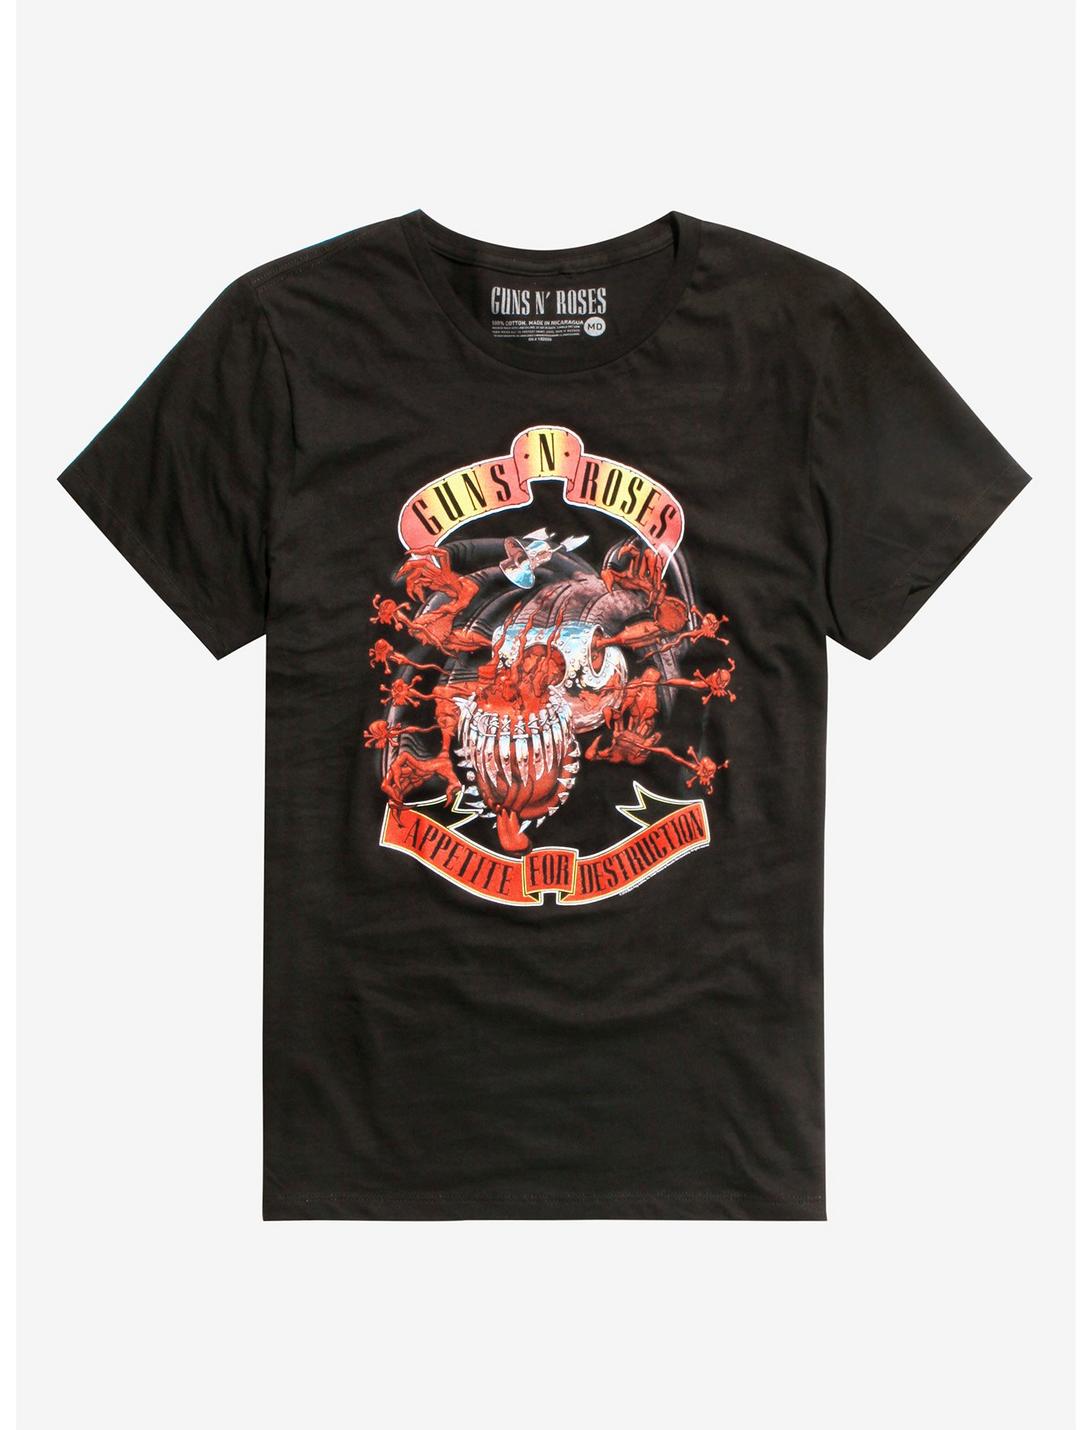 Guns N' Roses Appetite For Destruction Creature T-Shirt, BLACK, hi-res